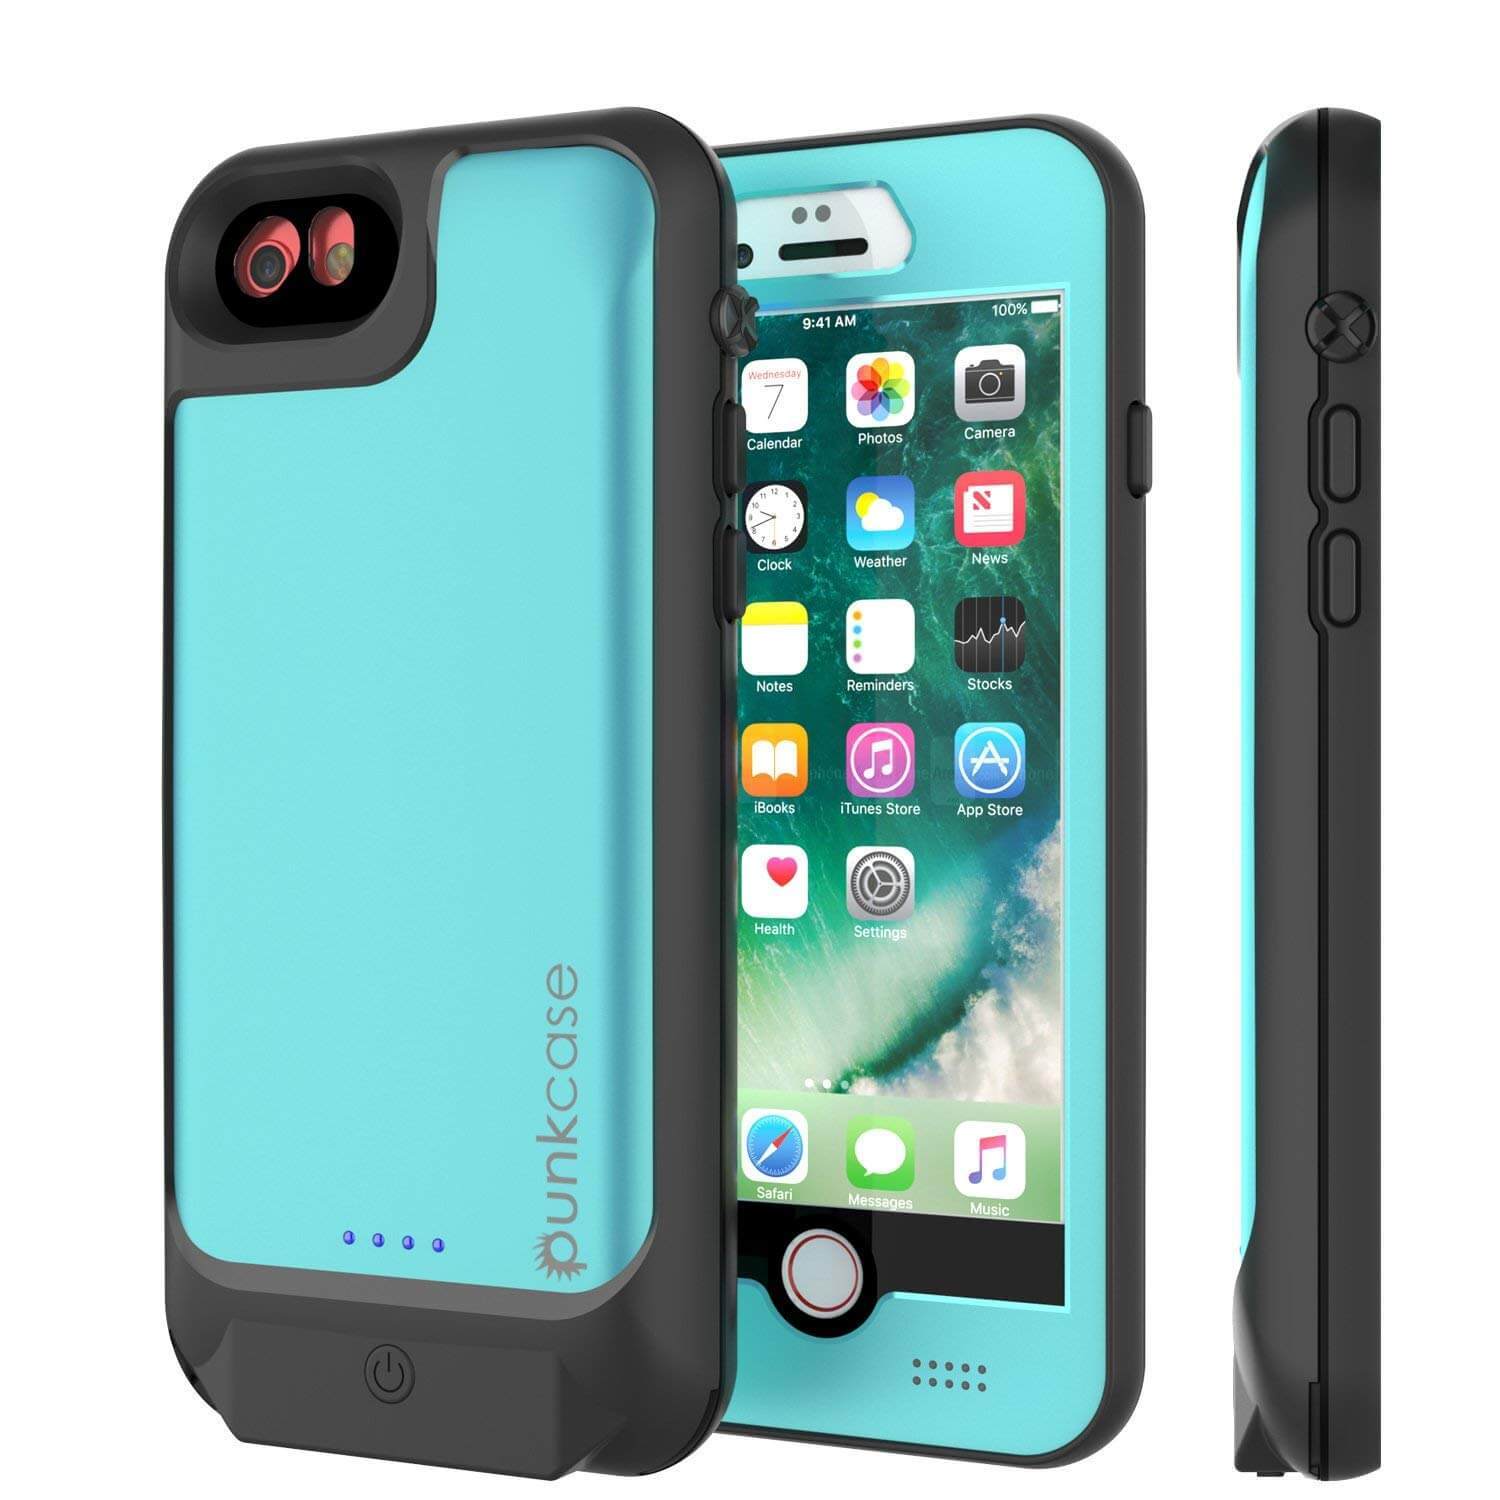 PunkJuice iPhone SE (4.7")/7 Battery Case Teal - Waterproof Slim Power Juice Bank with 2750mAh